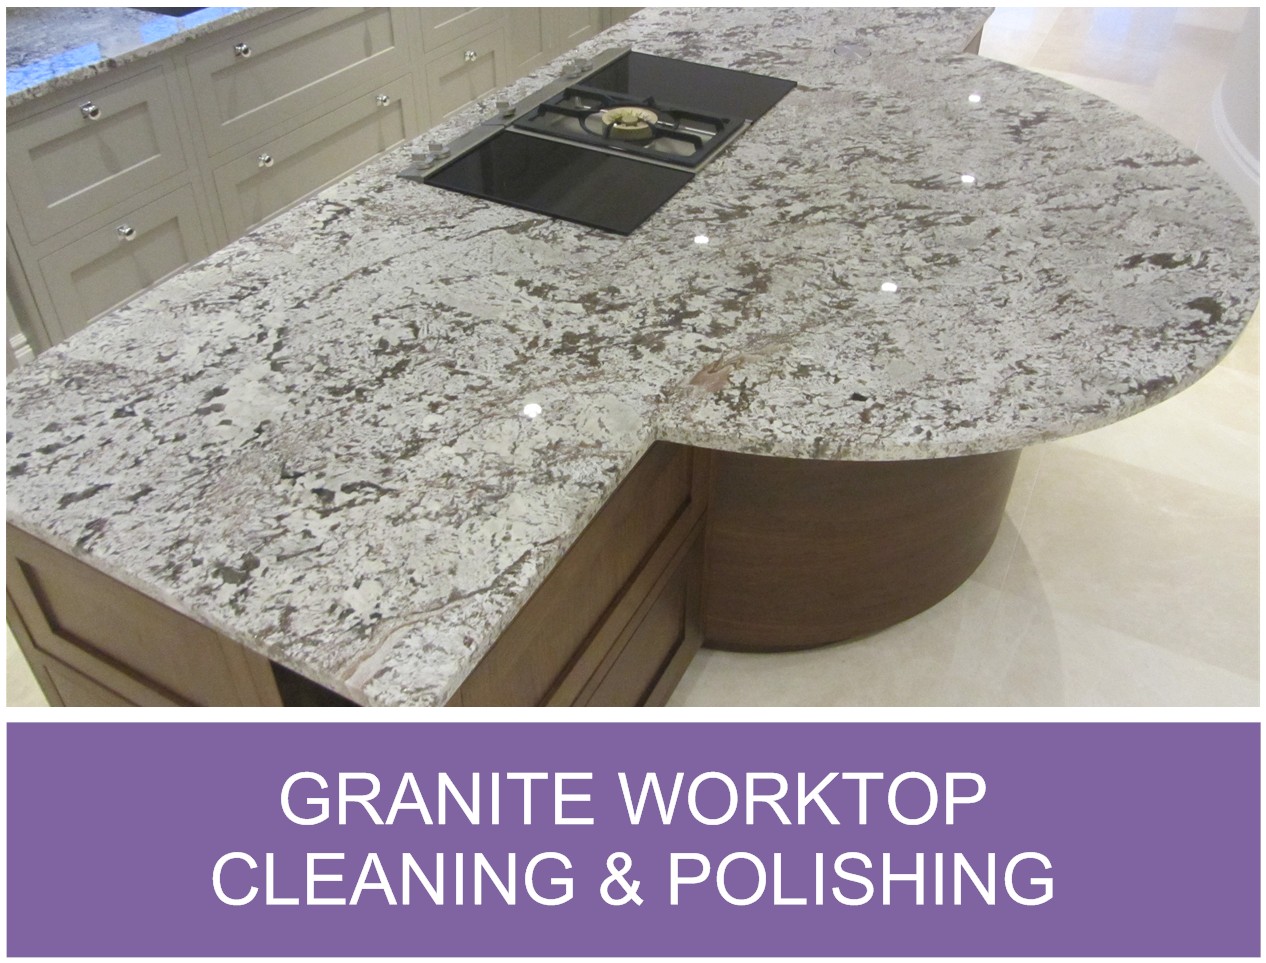 Granite Worktop Cleaning Polishing